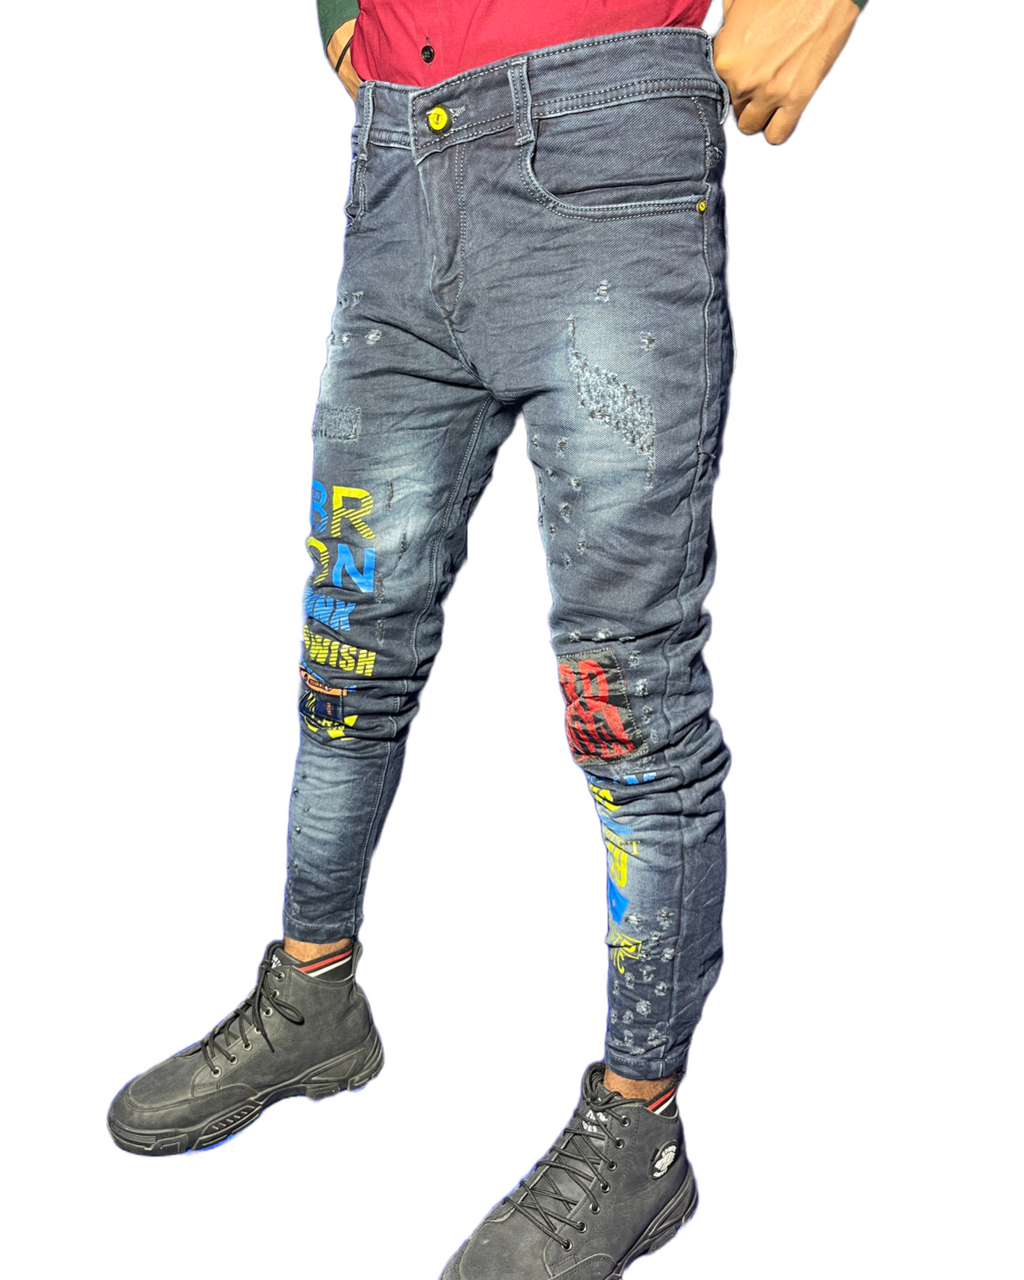 Jeans & Pants | New Trendy Denim Damage Jeans | Freeup